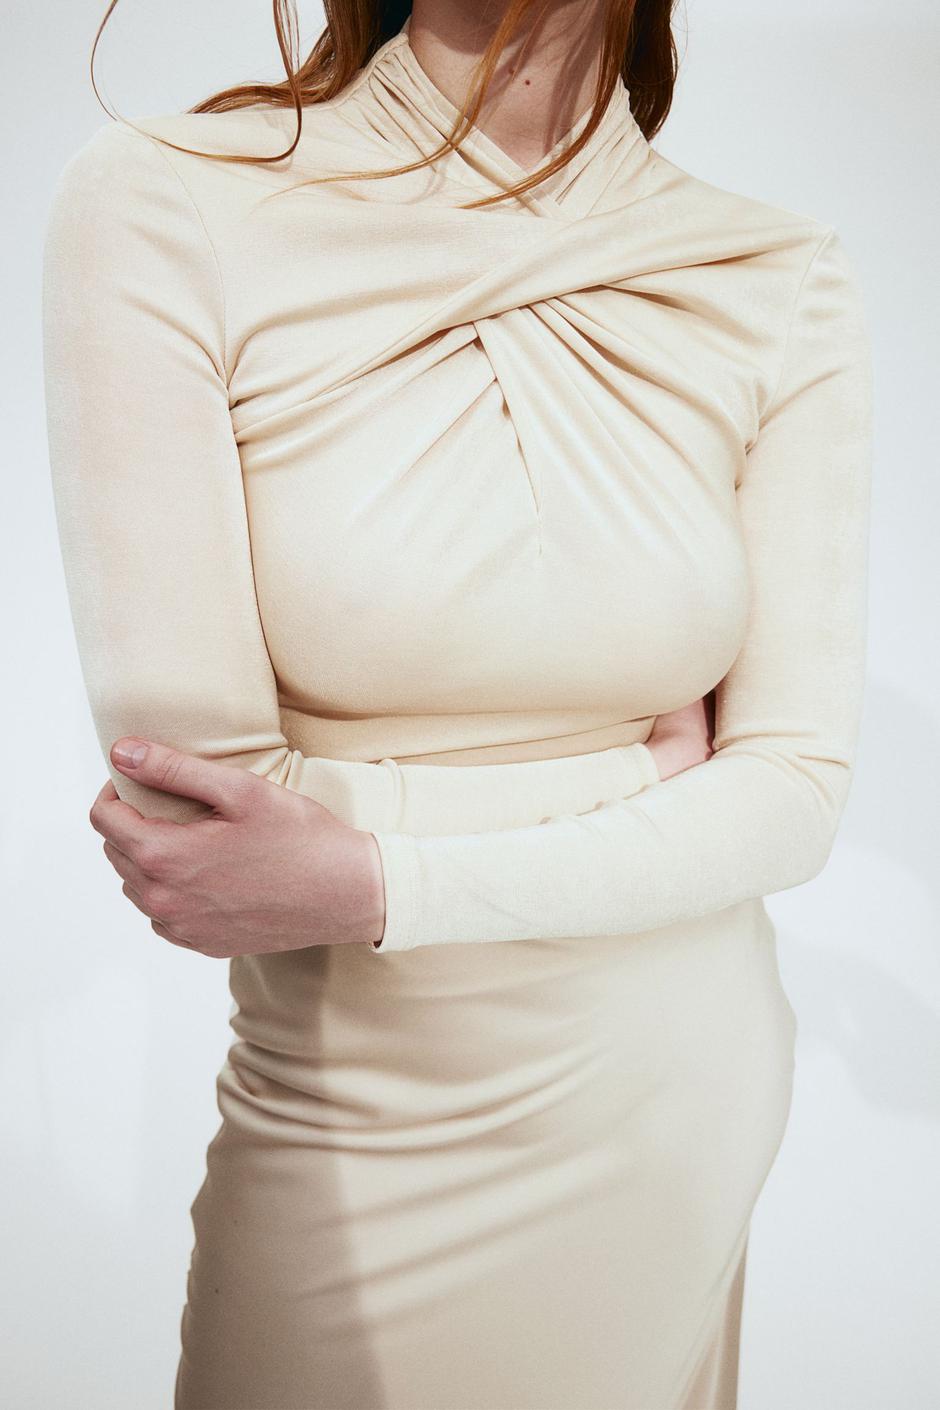 Foto: H&M, elegantni top u bež boji | Autor: H&M